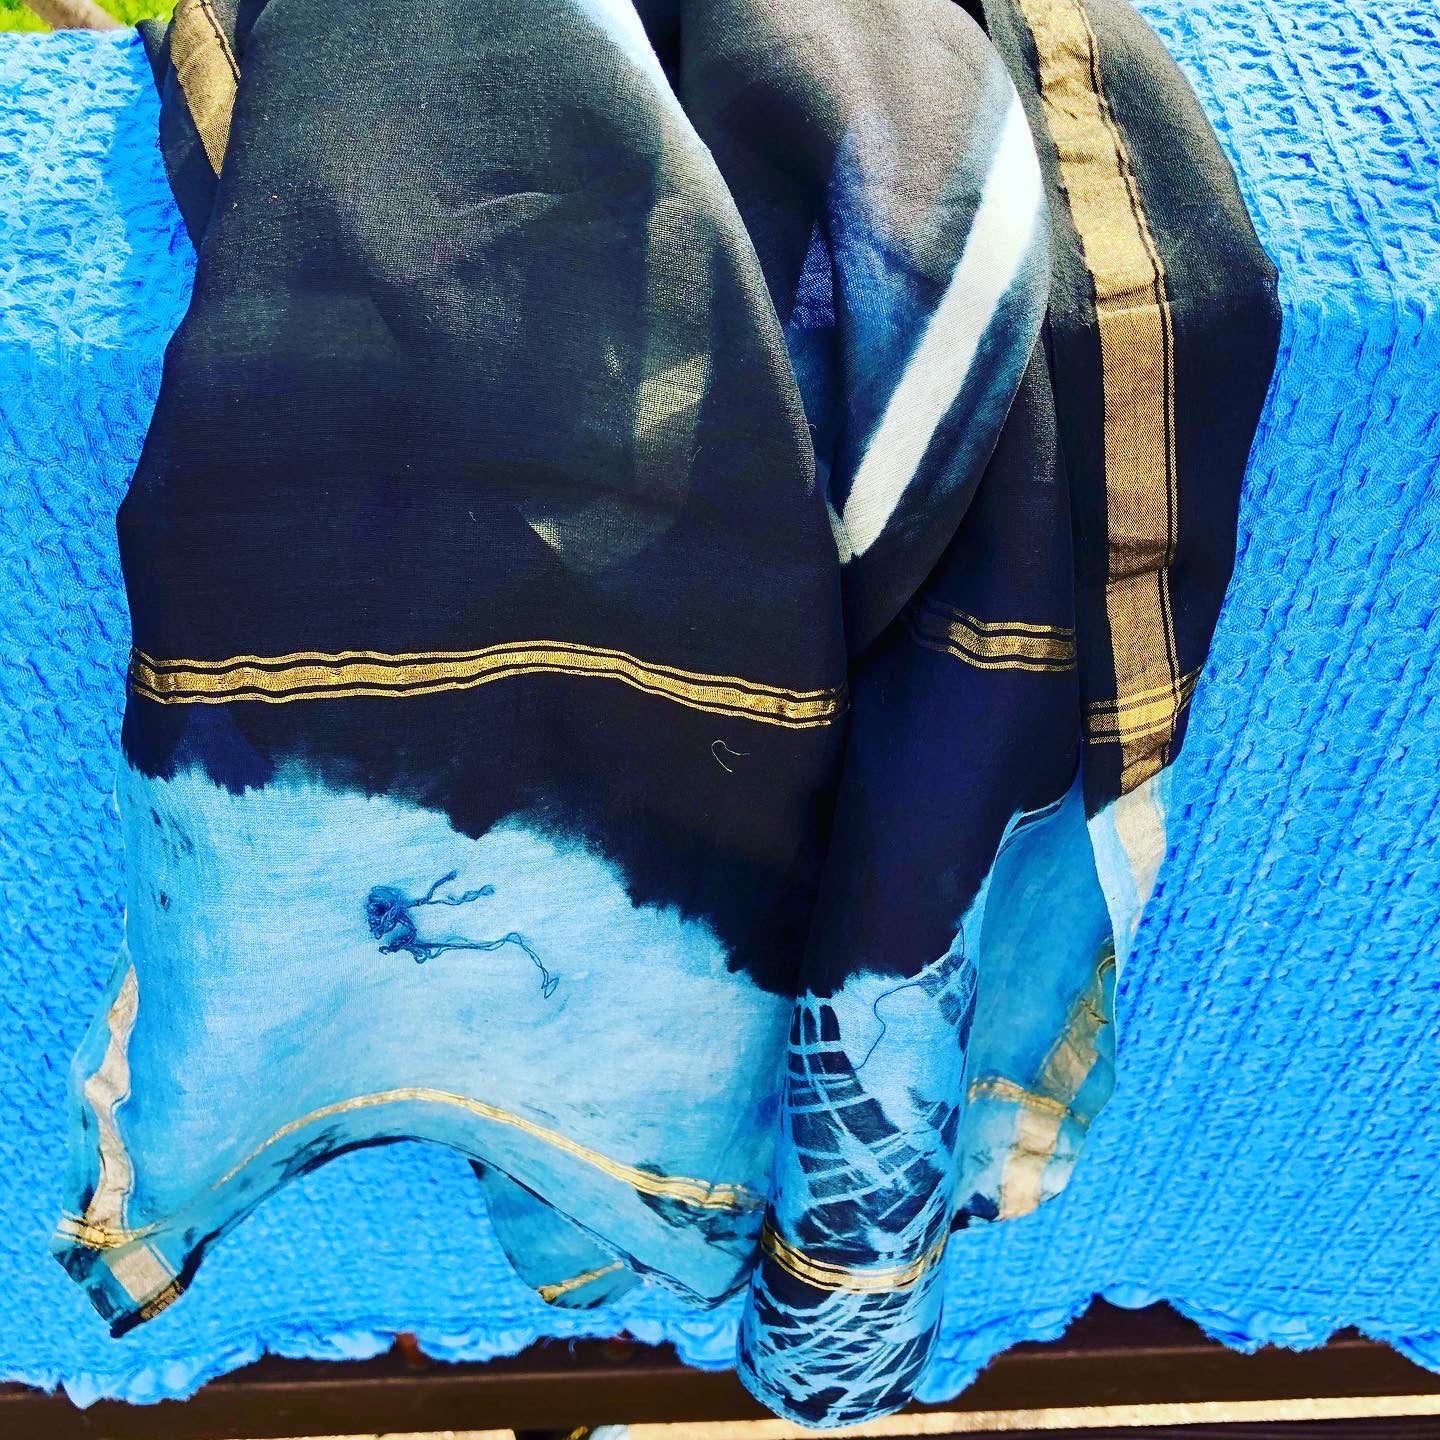 Plant indigo dye scarf